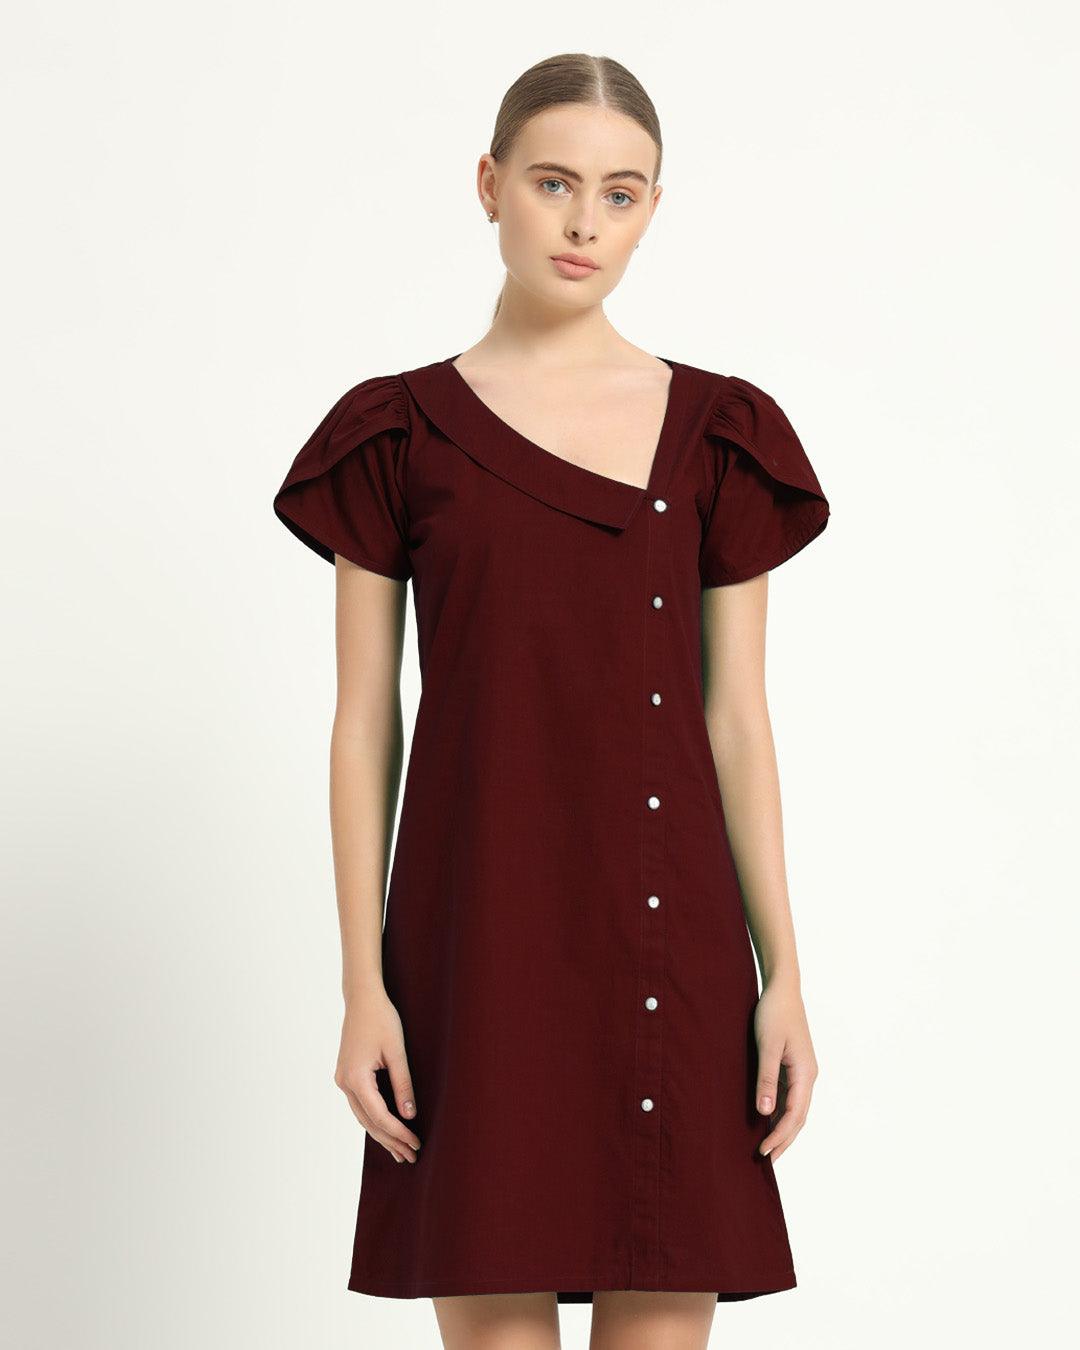 The Krensdorf Rouge Cotton Dress